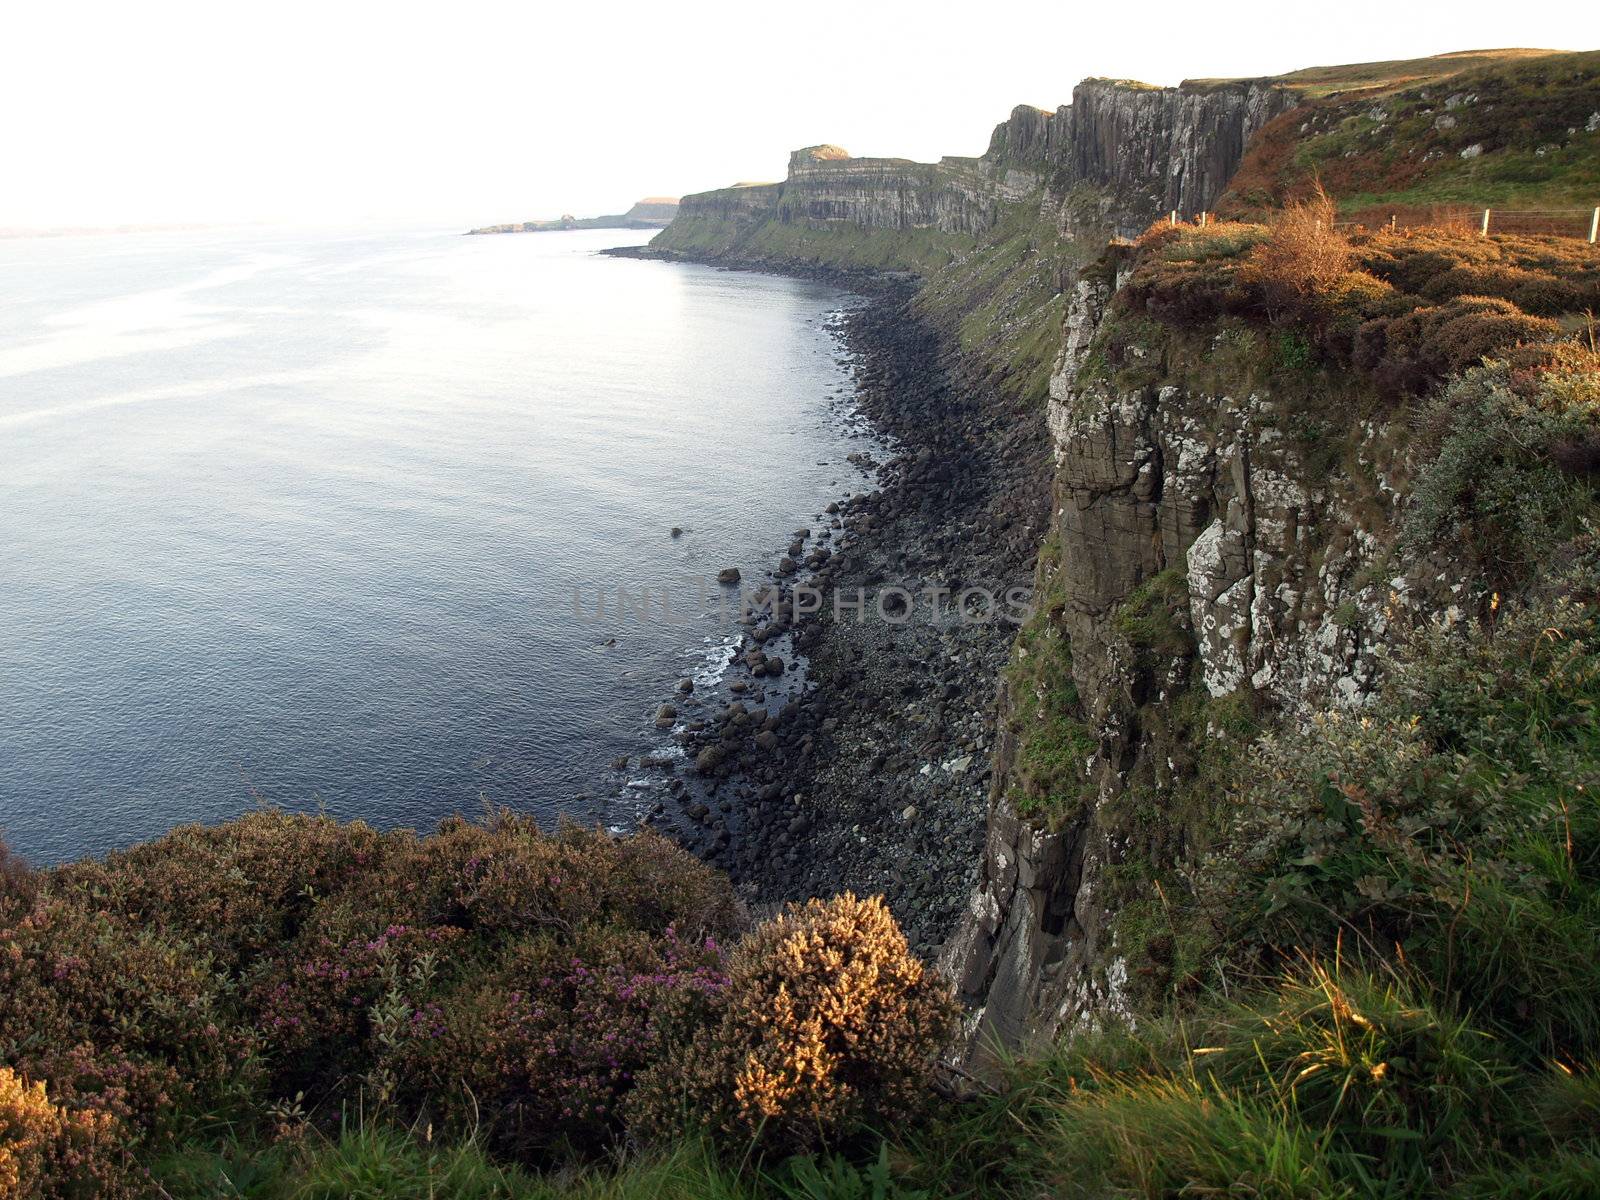 Cliffs of Kilt Rock, Scotland by anderm